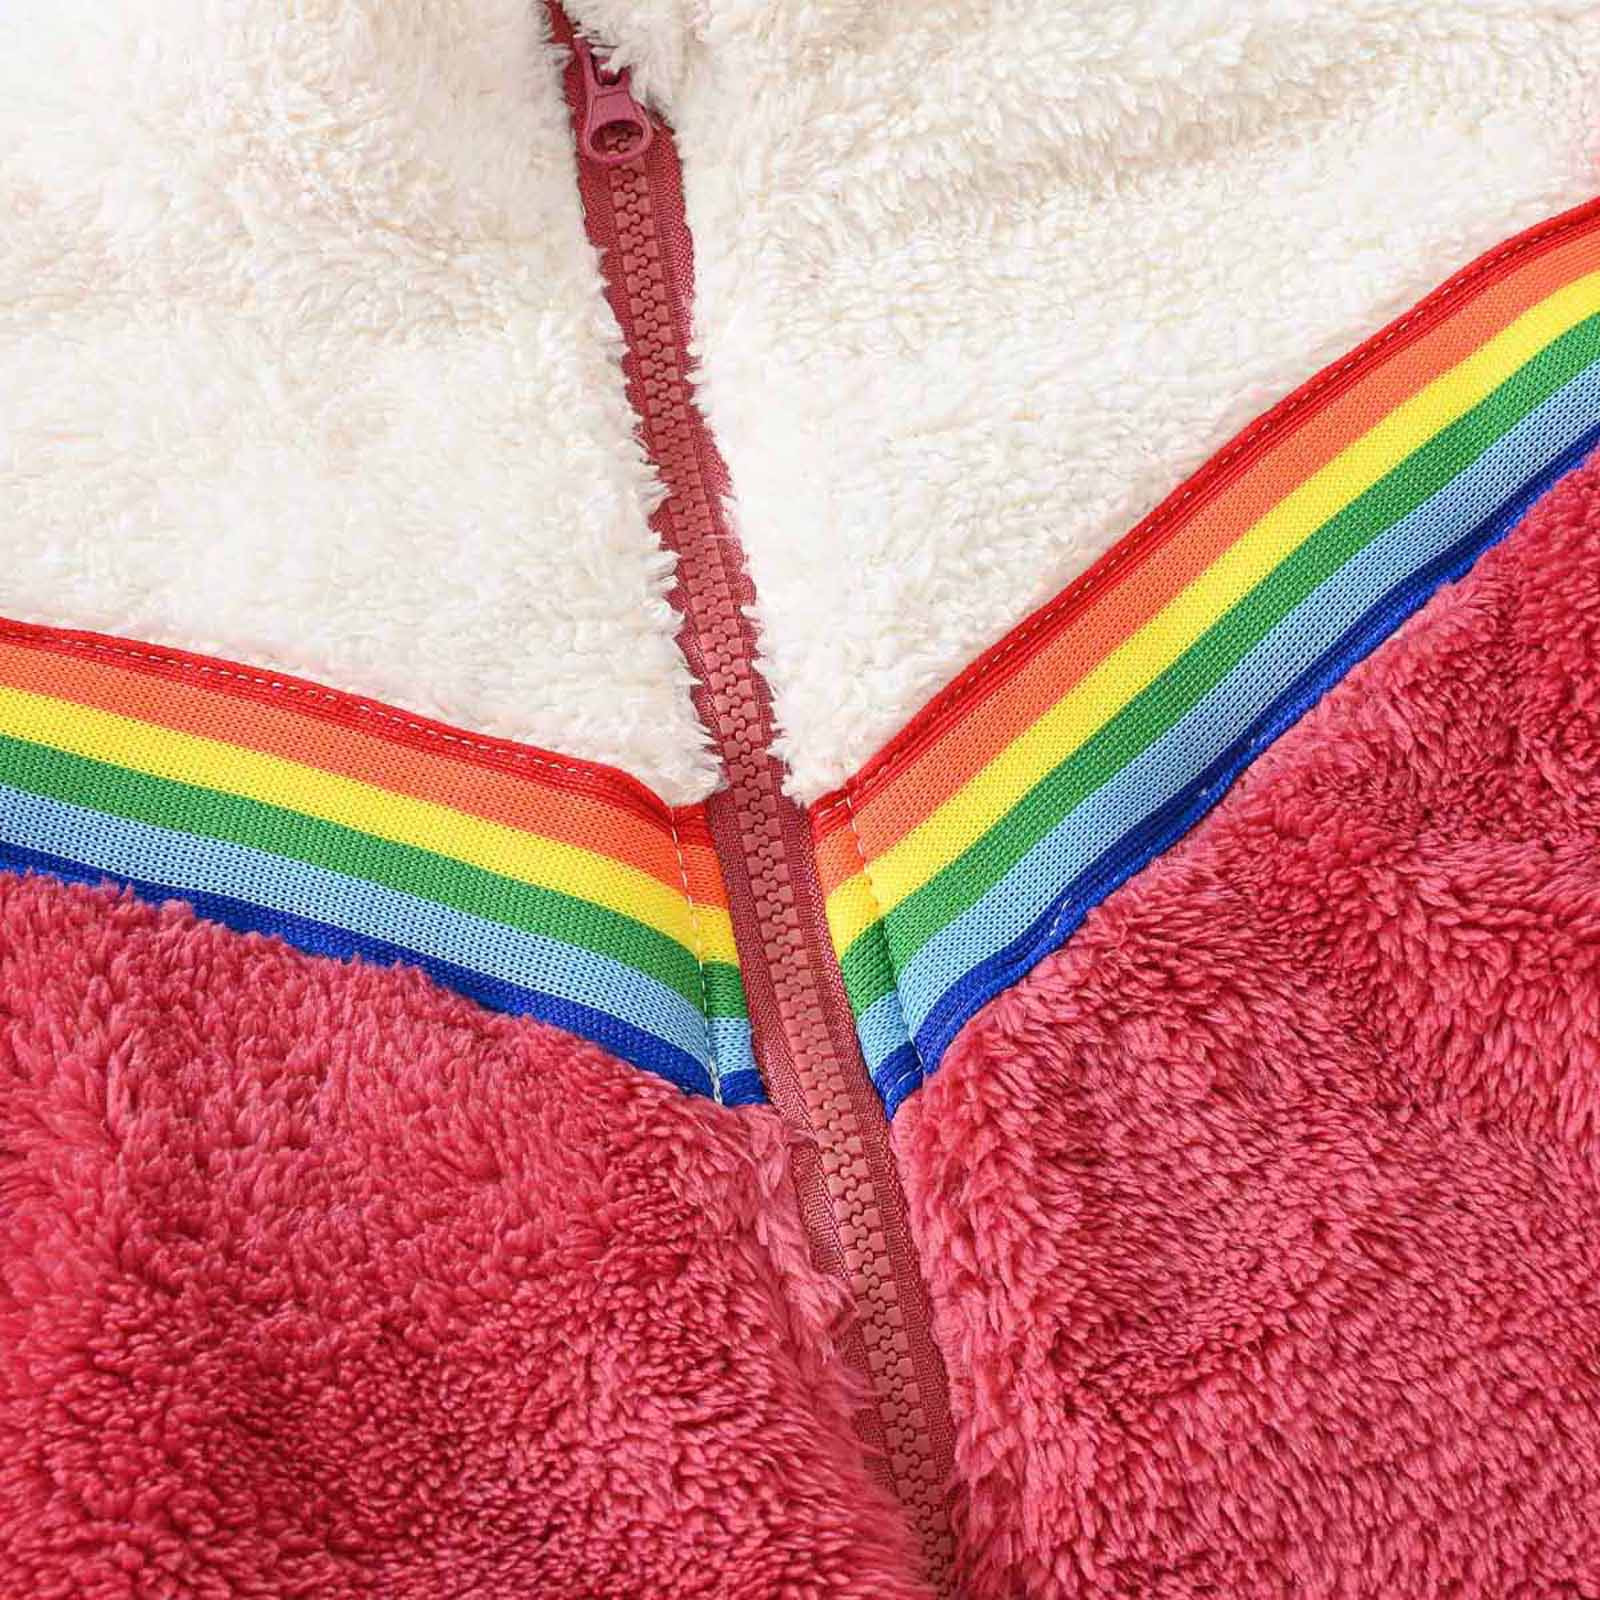 YYDGH Girls Zipper Jacket Fuzzy Sweatshirt Long Sleeve Casual Cozy Fleece Sherpa Outwear Coat Full-Zip Rainbow Jackets(Red,3-4 Years) - image 5 of 8